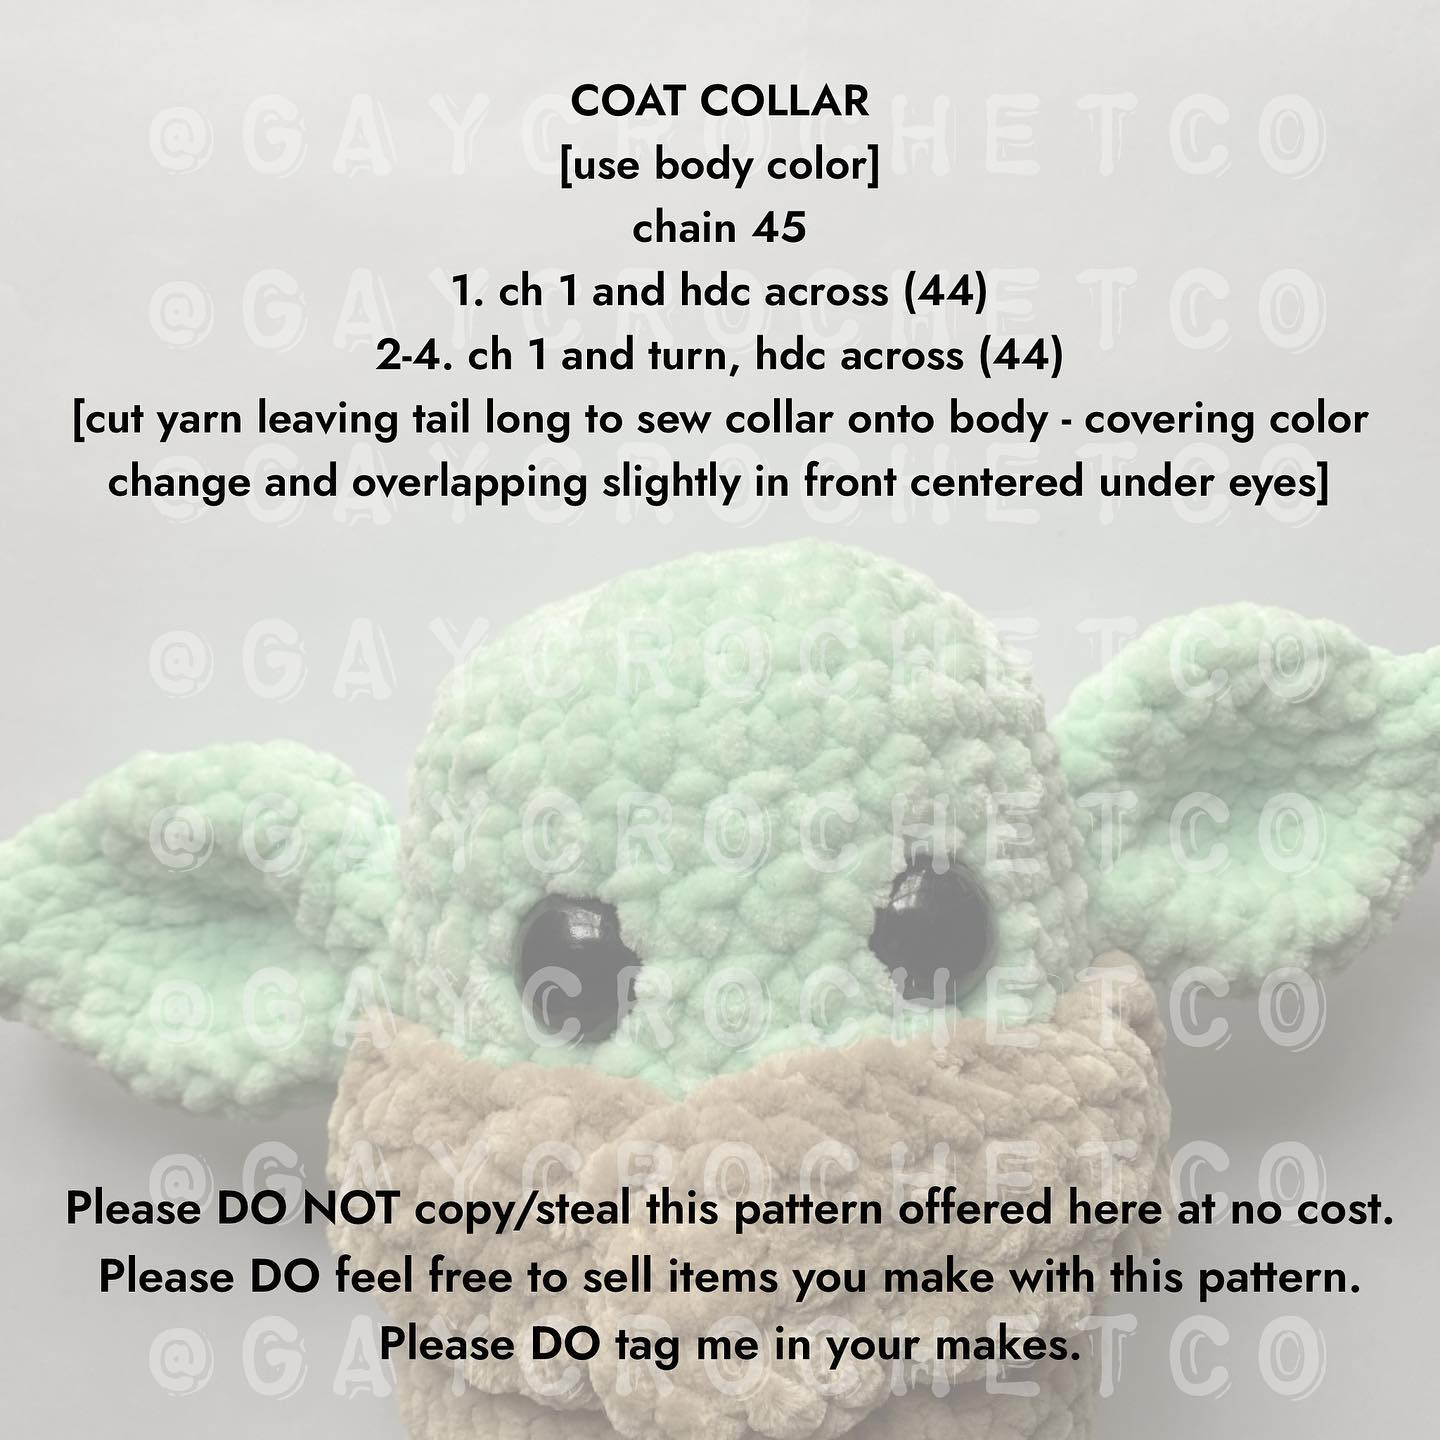 Yoda mini crochet